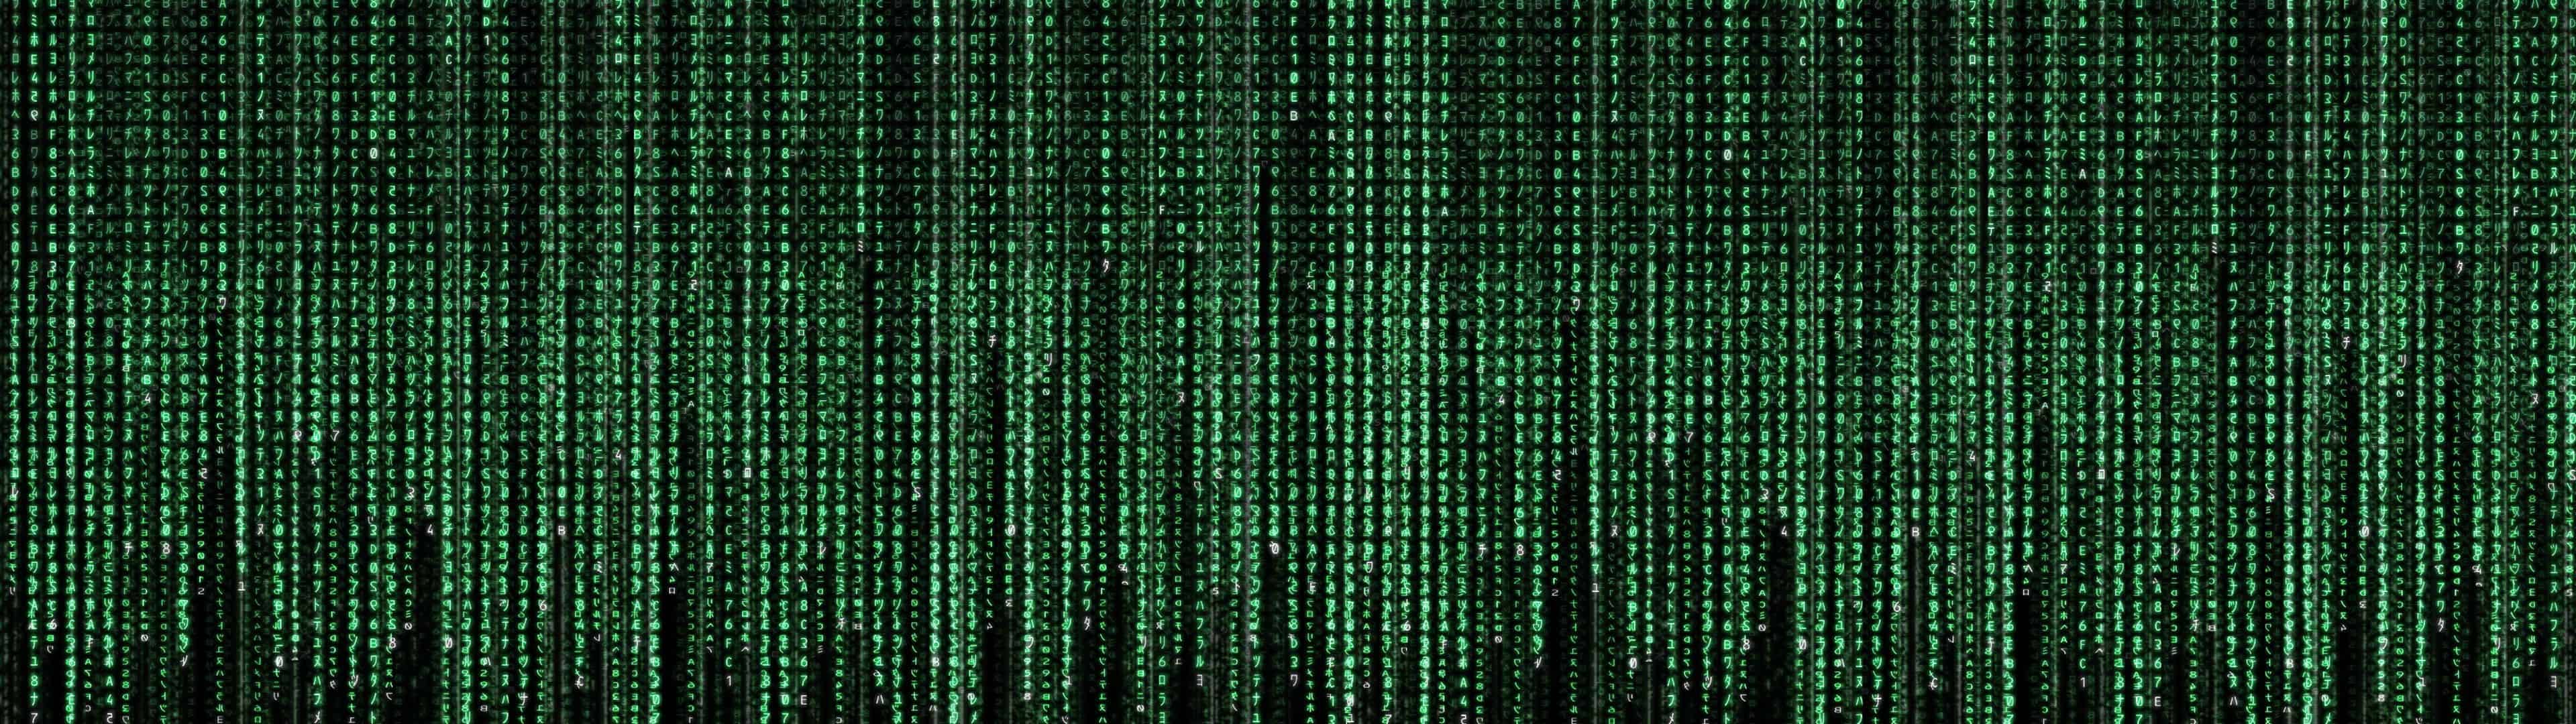 The Matrix Code Dual Monitor Wallpaper